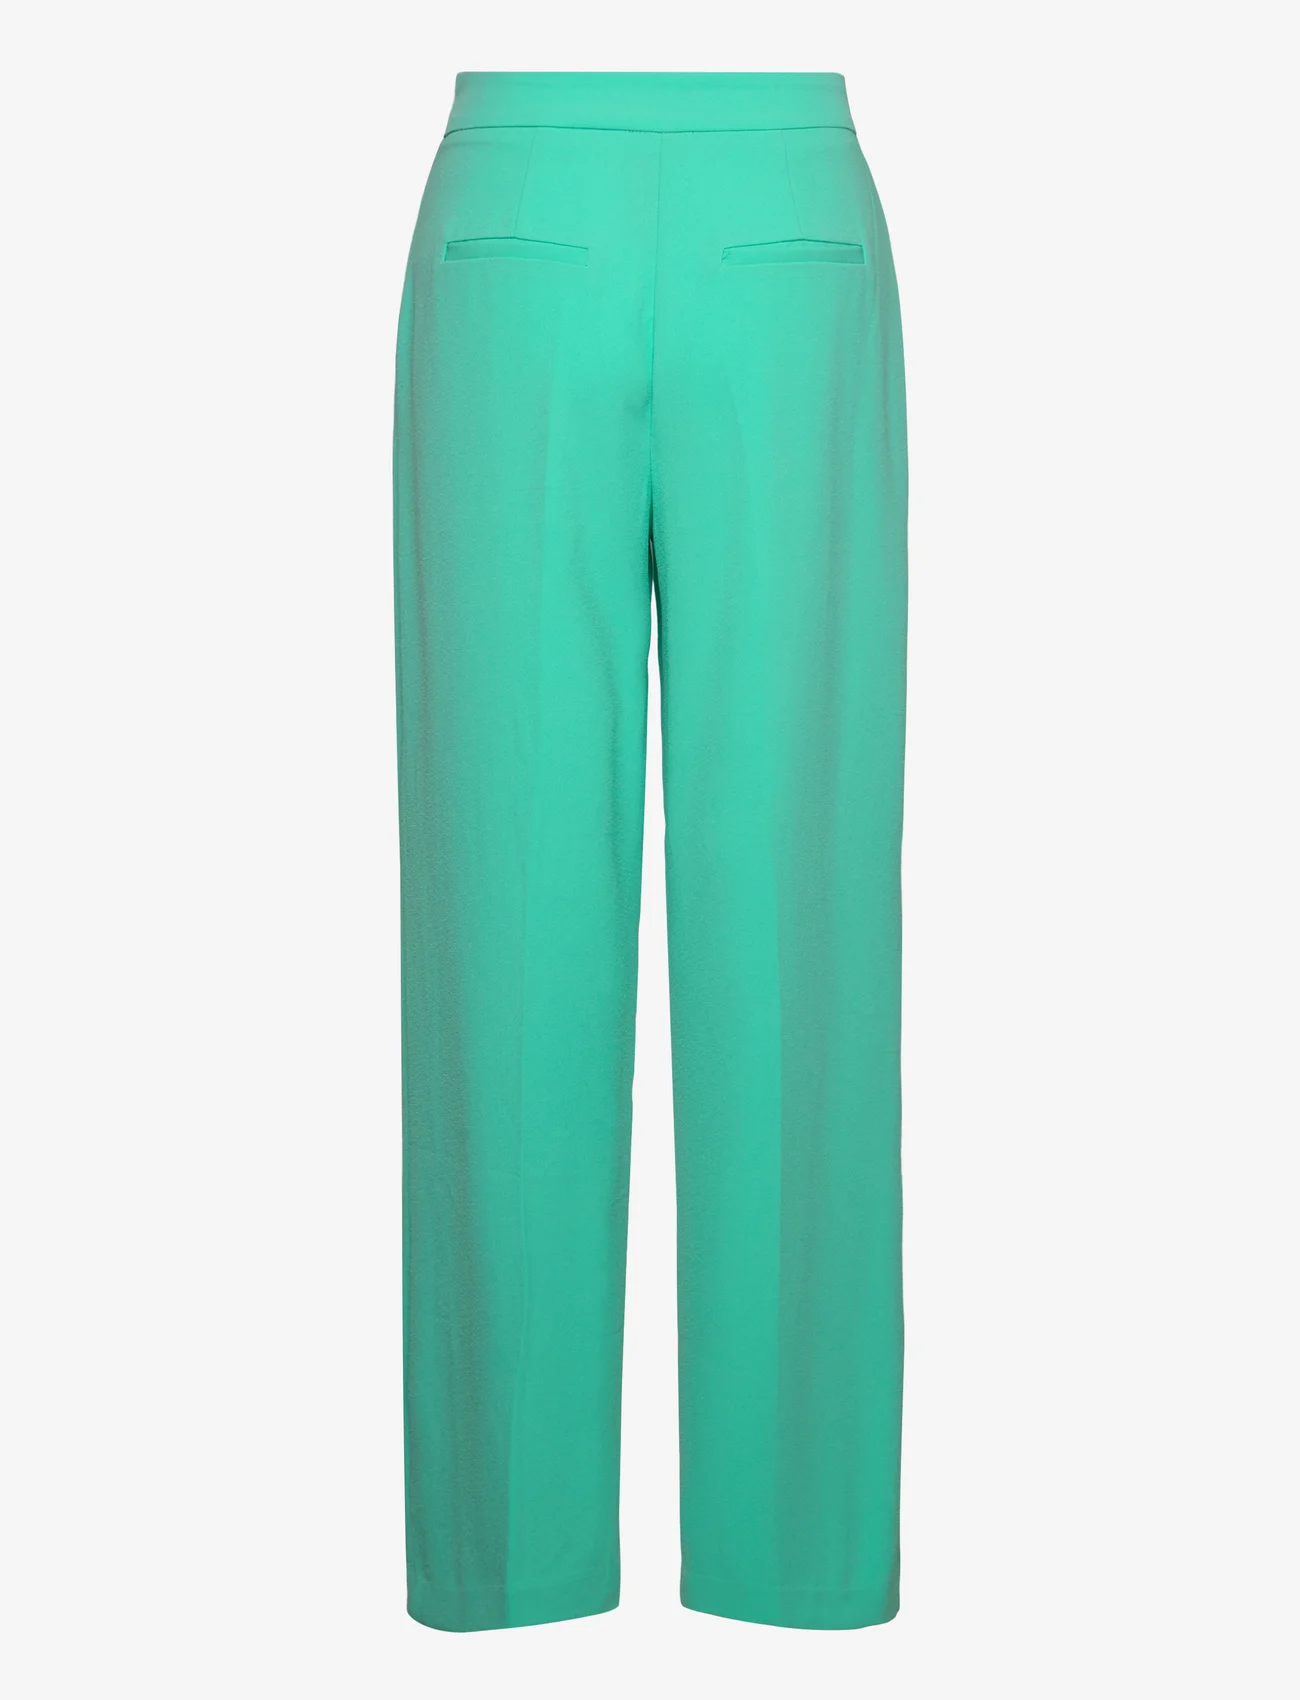 Coster Copenhagen - CC Heart ELLIE loose fit trousers - - tailored trousers - mint - 1